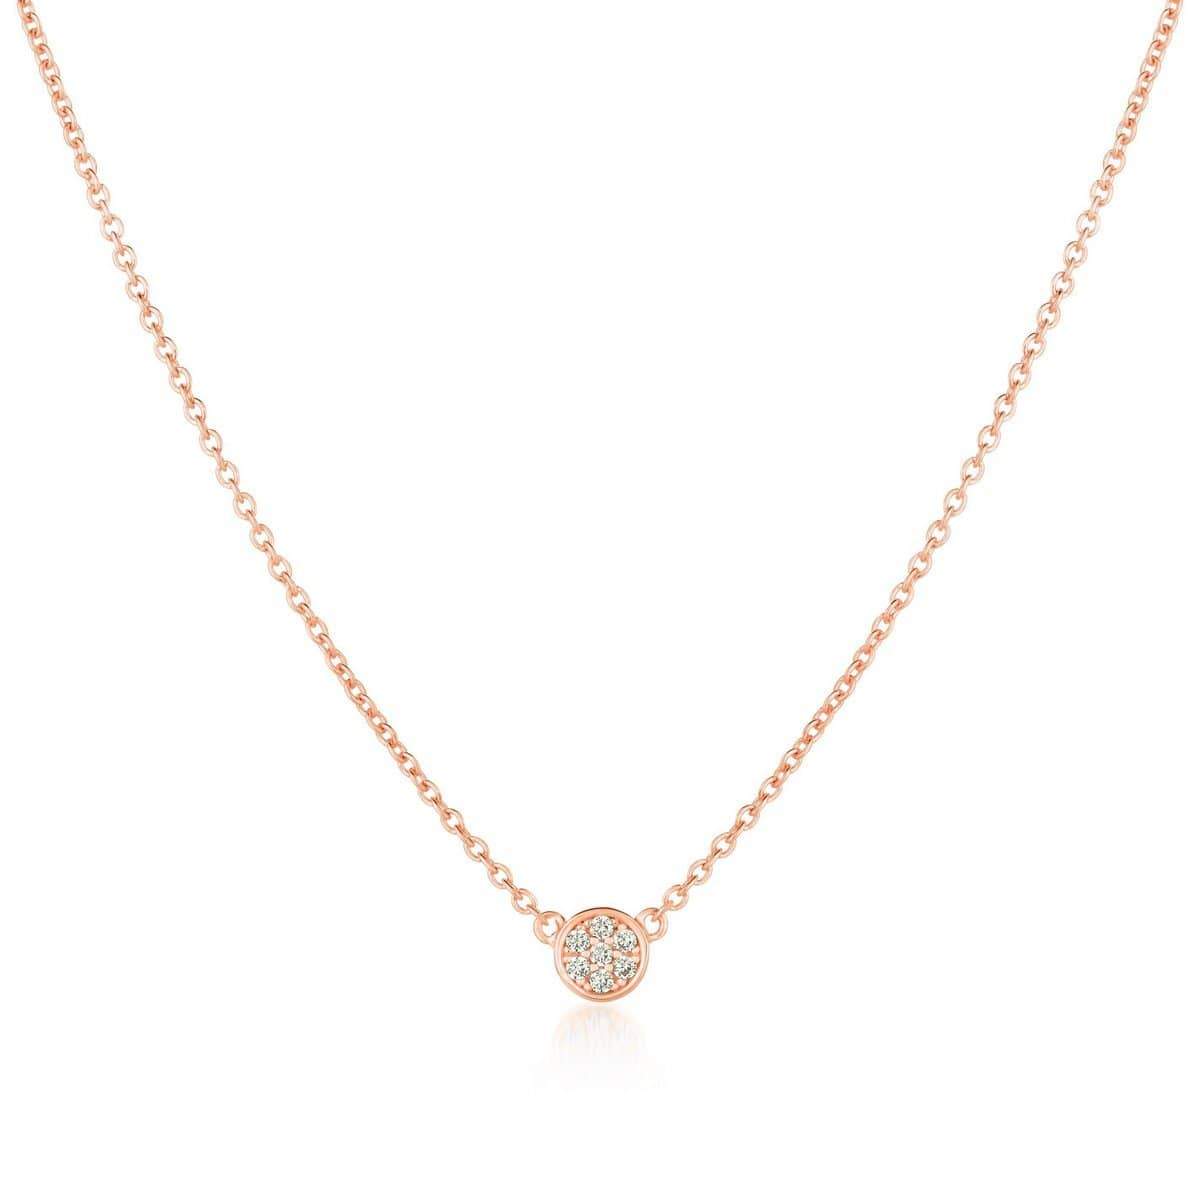 Crislu Jewelry CRISLU Single Sugar Drop Necklace finished in 18KT Rose Gold